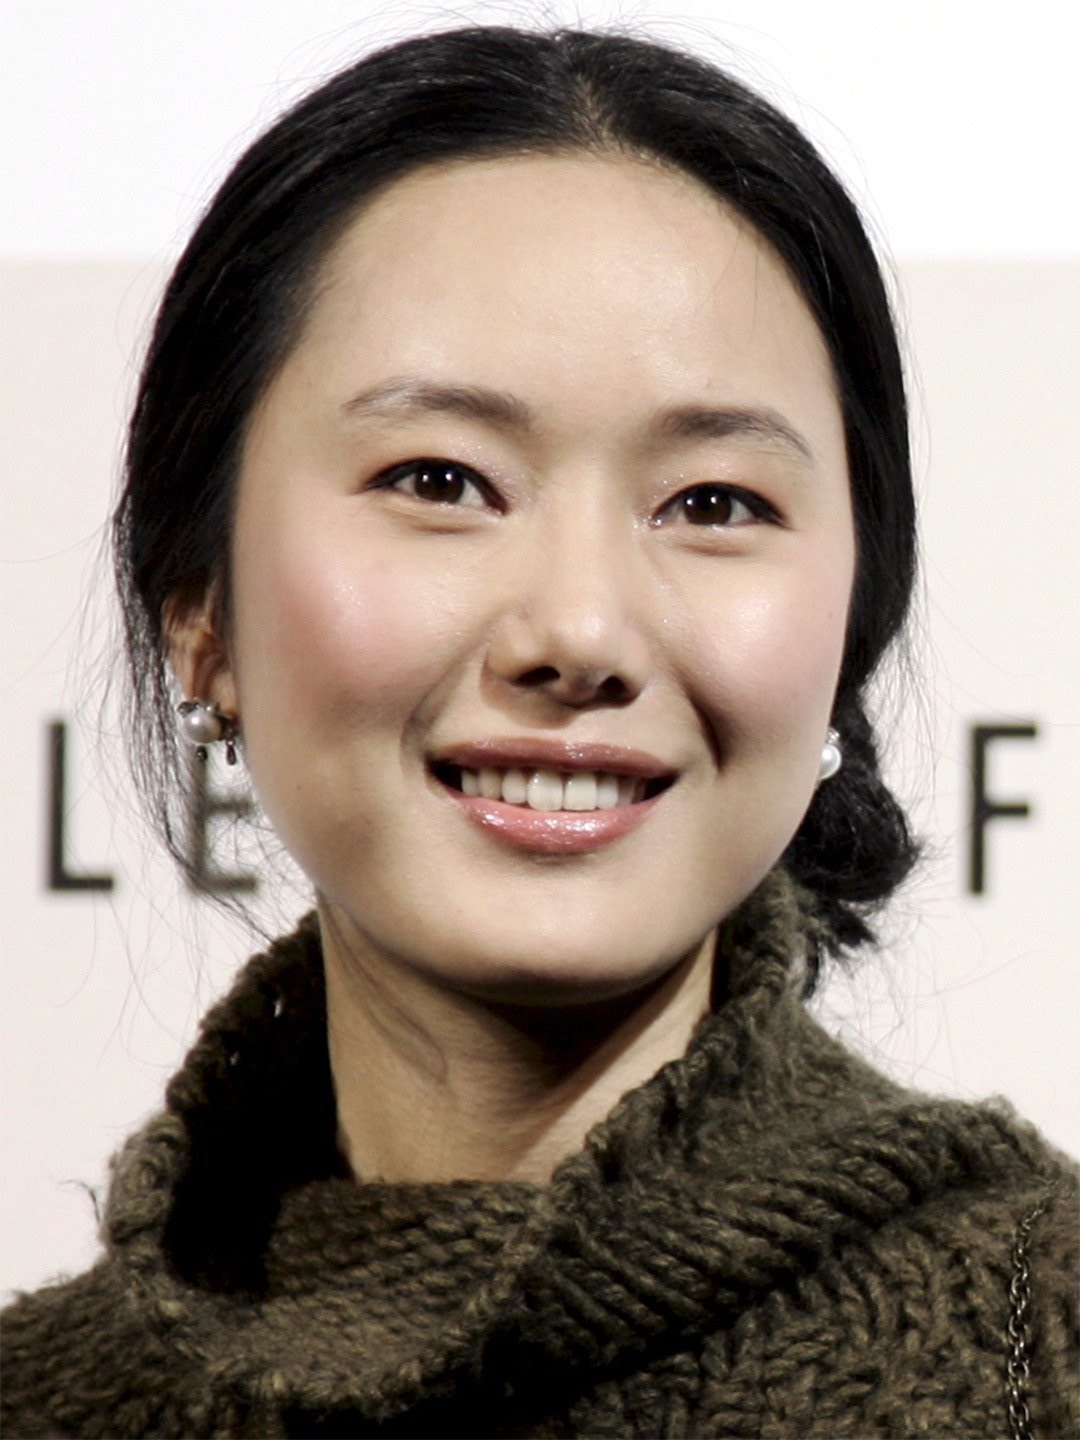 Yoon Jin-seo South Korean Actress